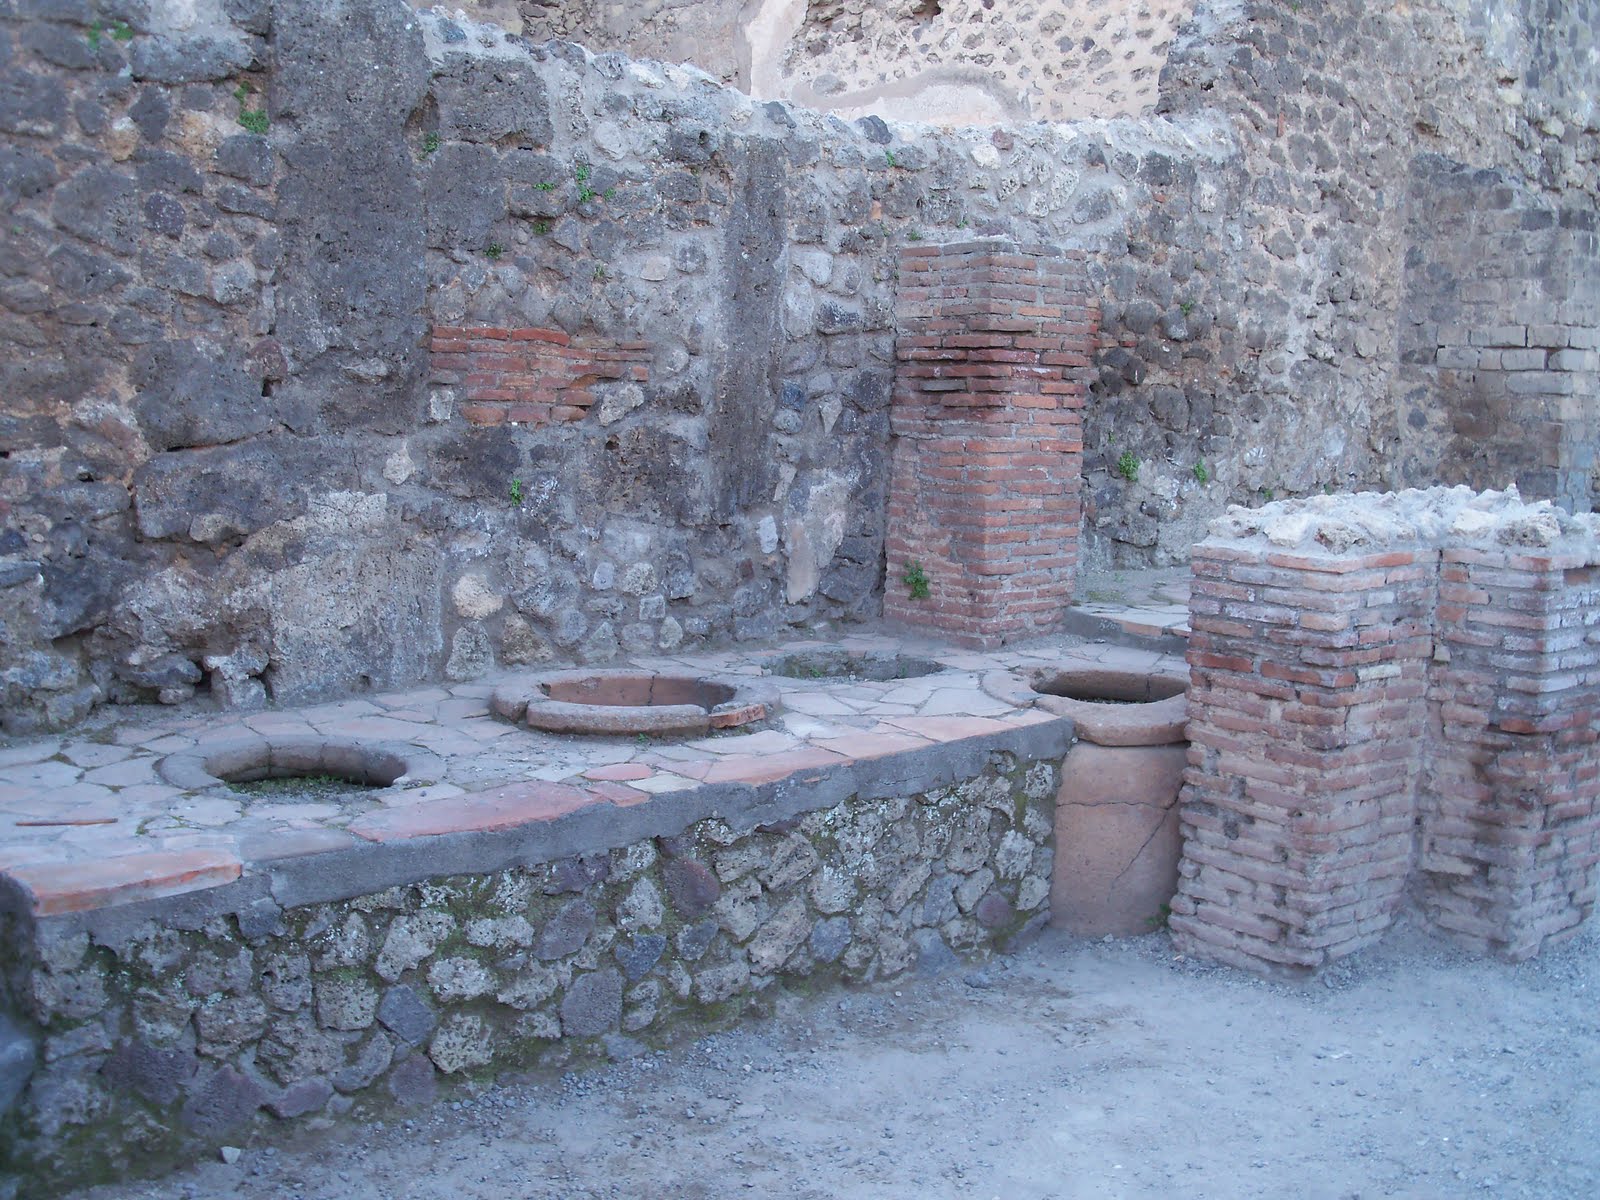 pompeii snack bar